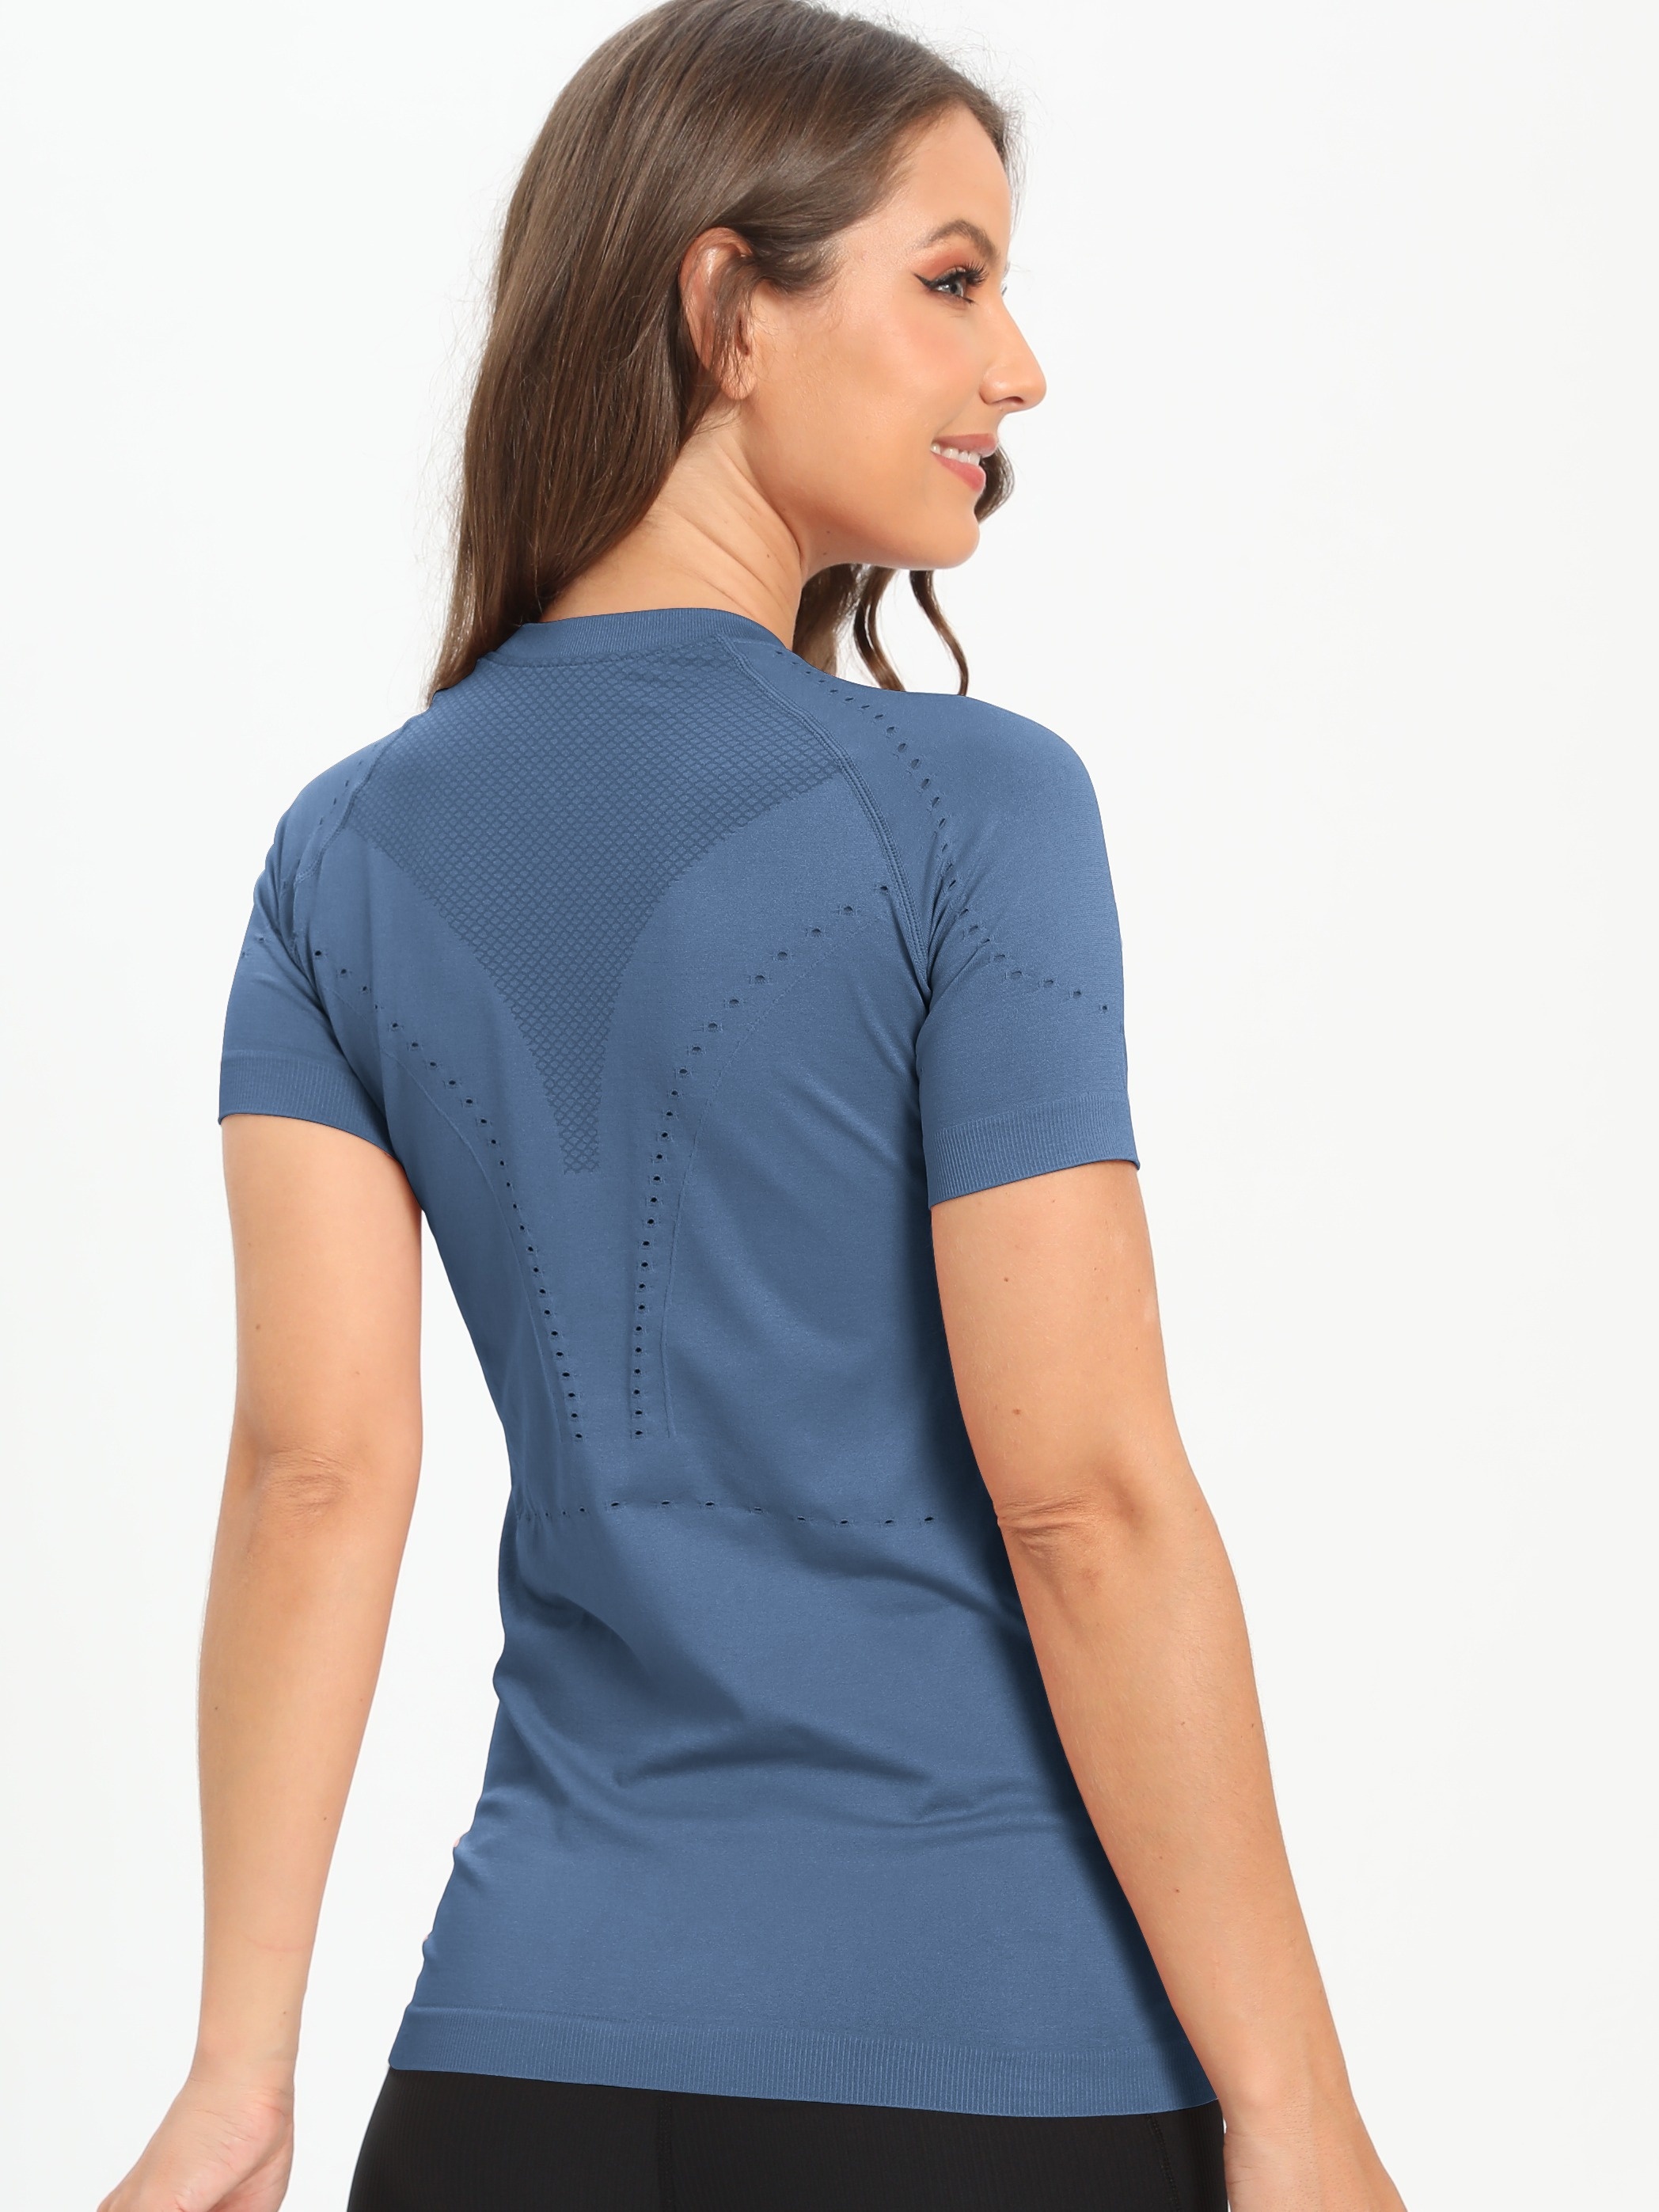 SPECIALMAGIC Women's Athletic Short Sleeve Round Neck Yoga Shirt